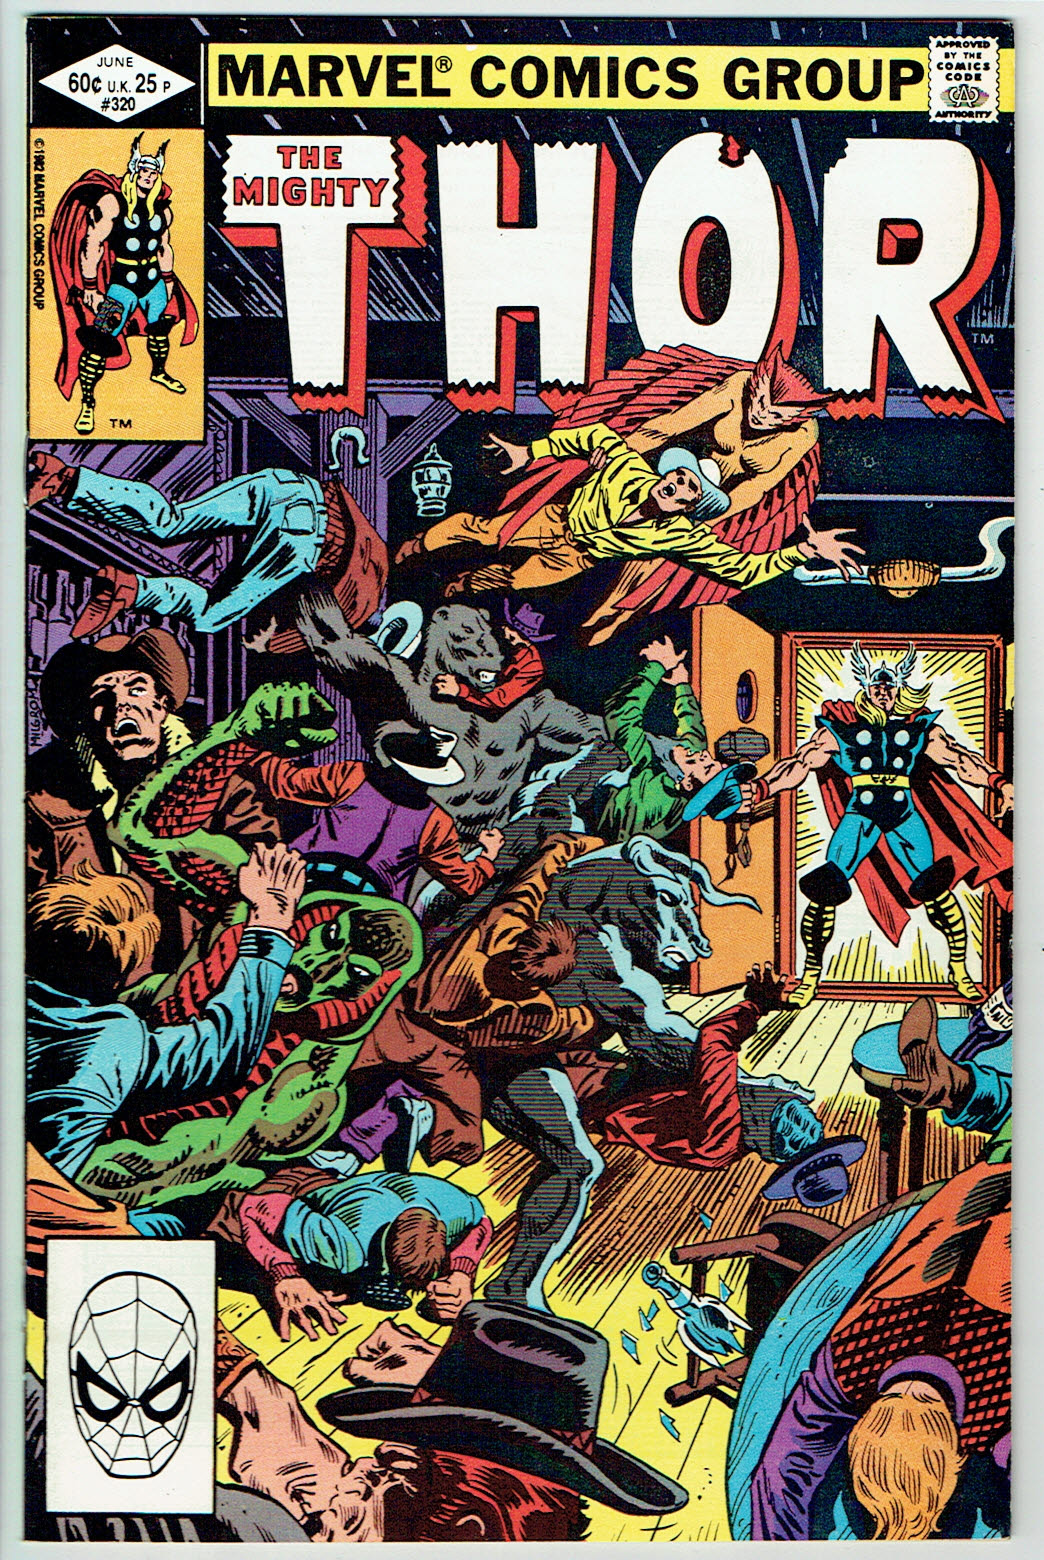 Thor #320